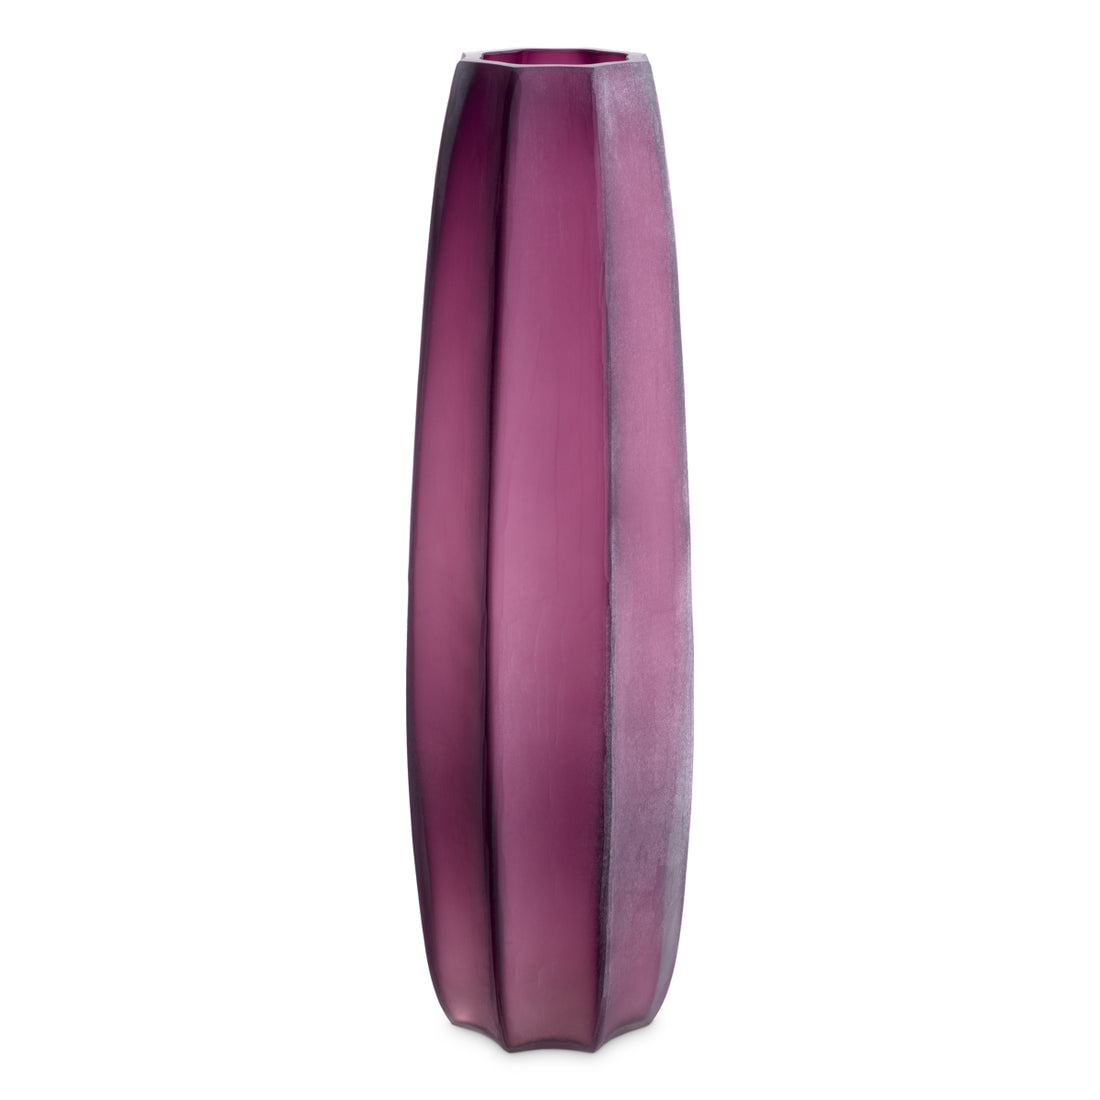 Vase Tiara L purple